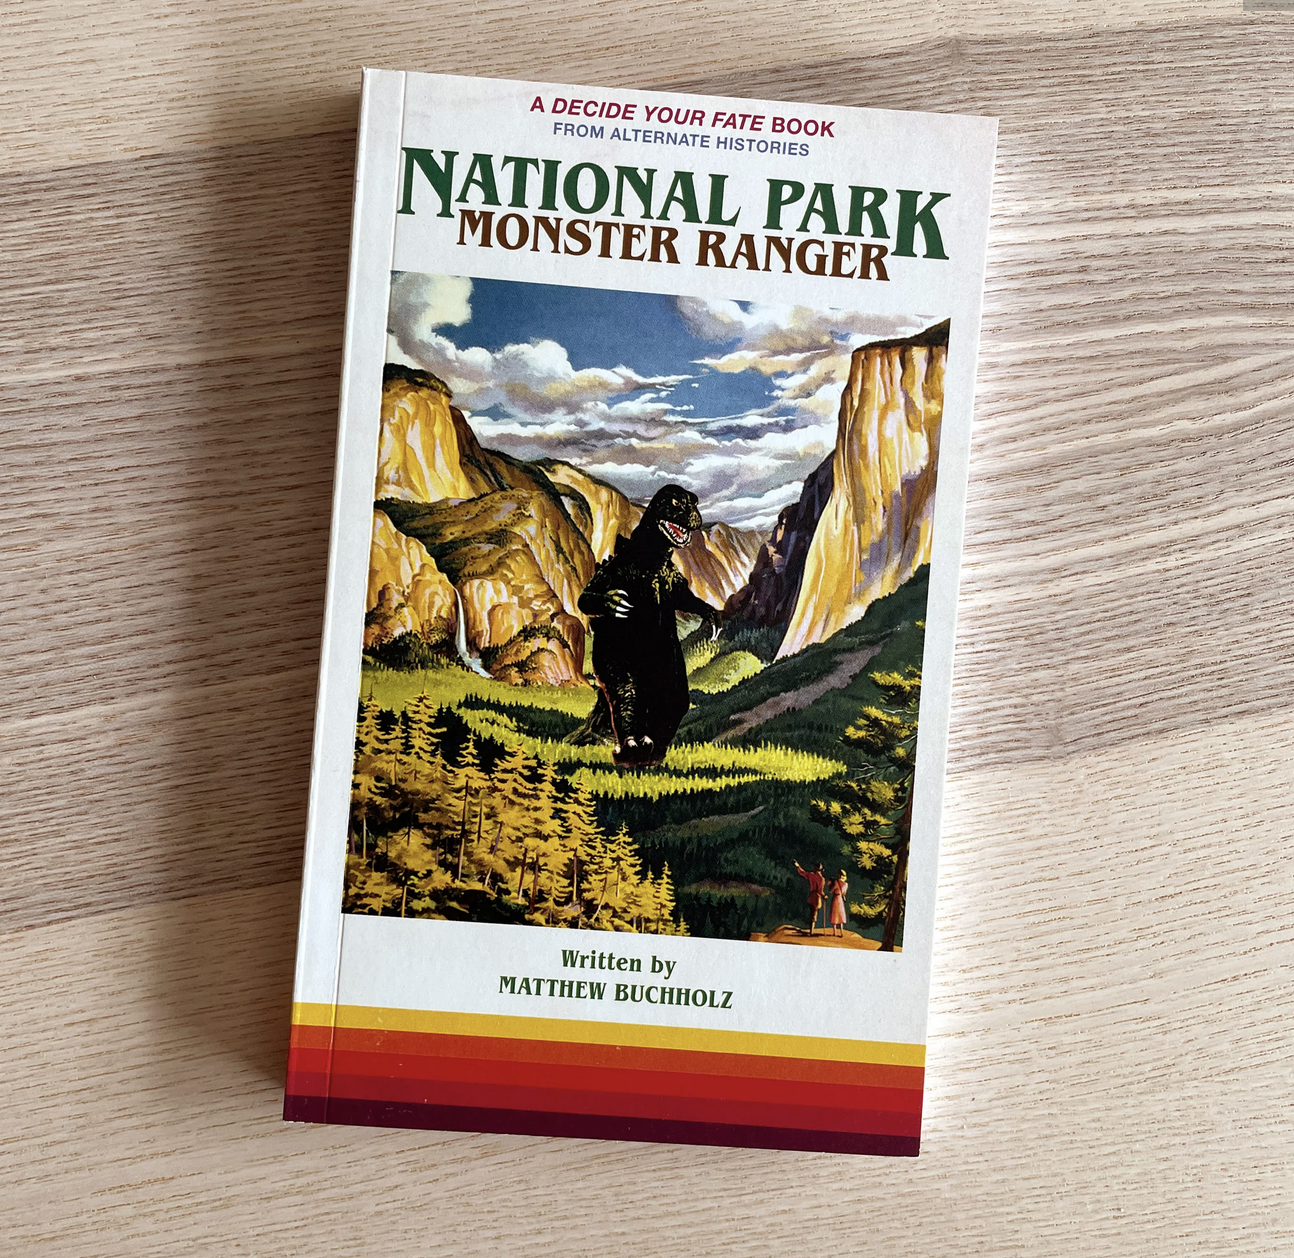 National Park Monster Ranger - Decide Your Fate Book